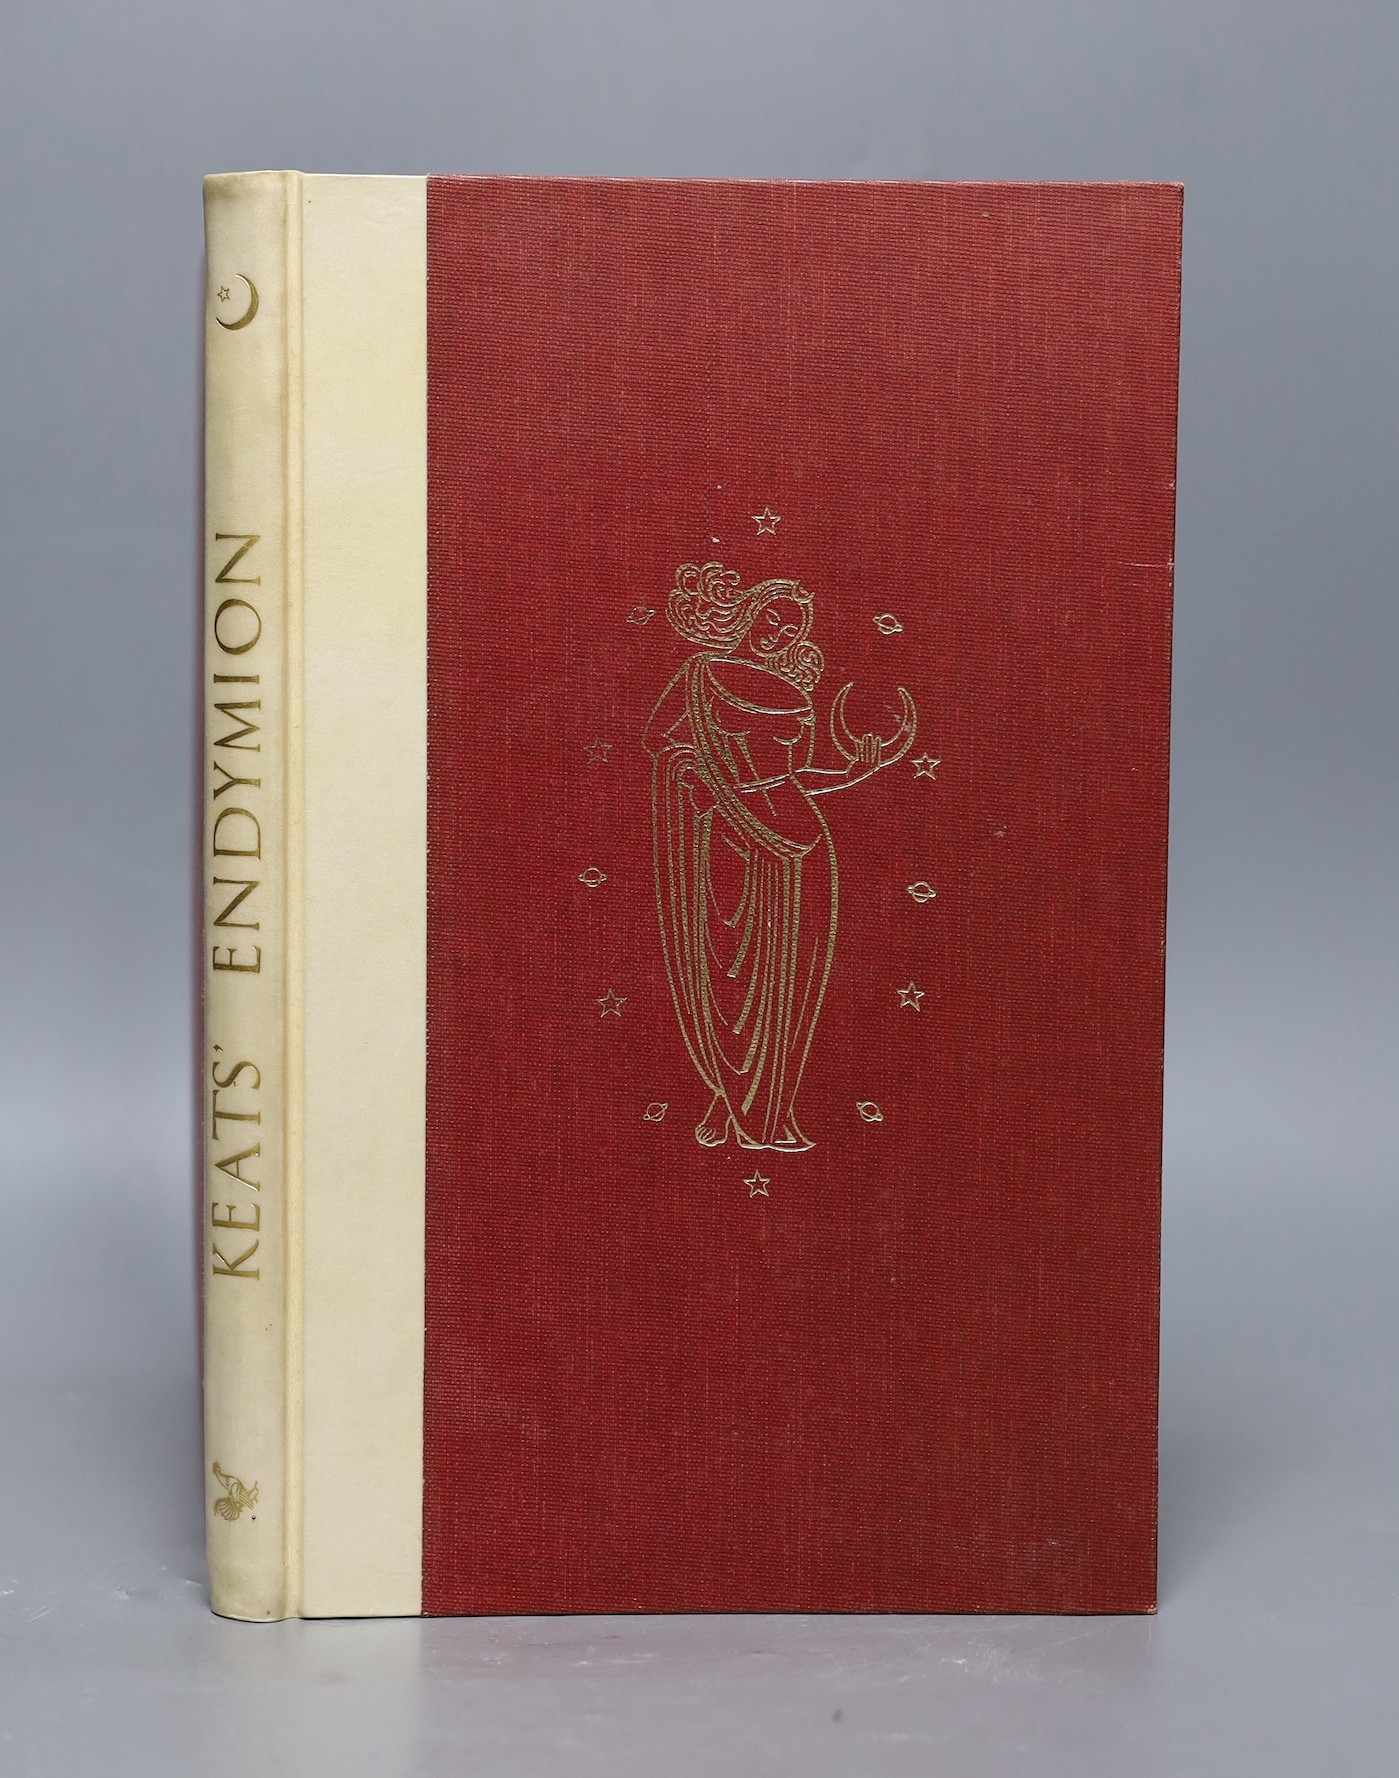 Golden Cockerel Press - Keats, John - Endymion, one of 500, illustrated by John Buckland-Wright, original half vellum, by Sangorski and Sutcliffe, Waltham Saint Lawrence, 1947                                             